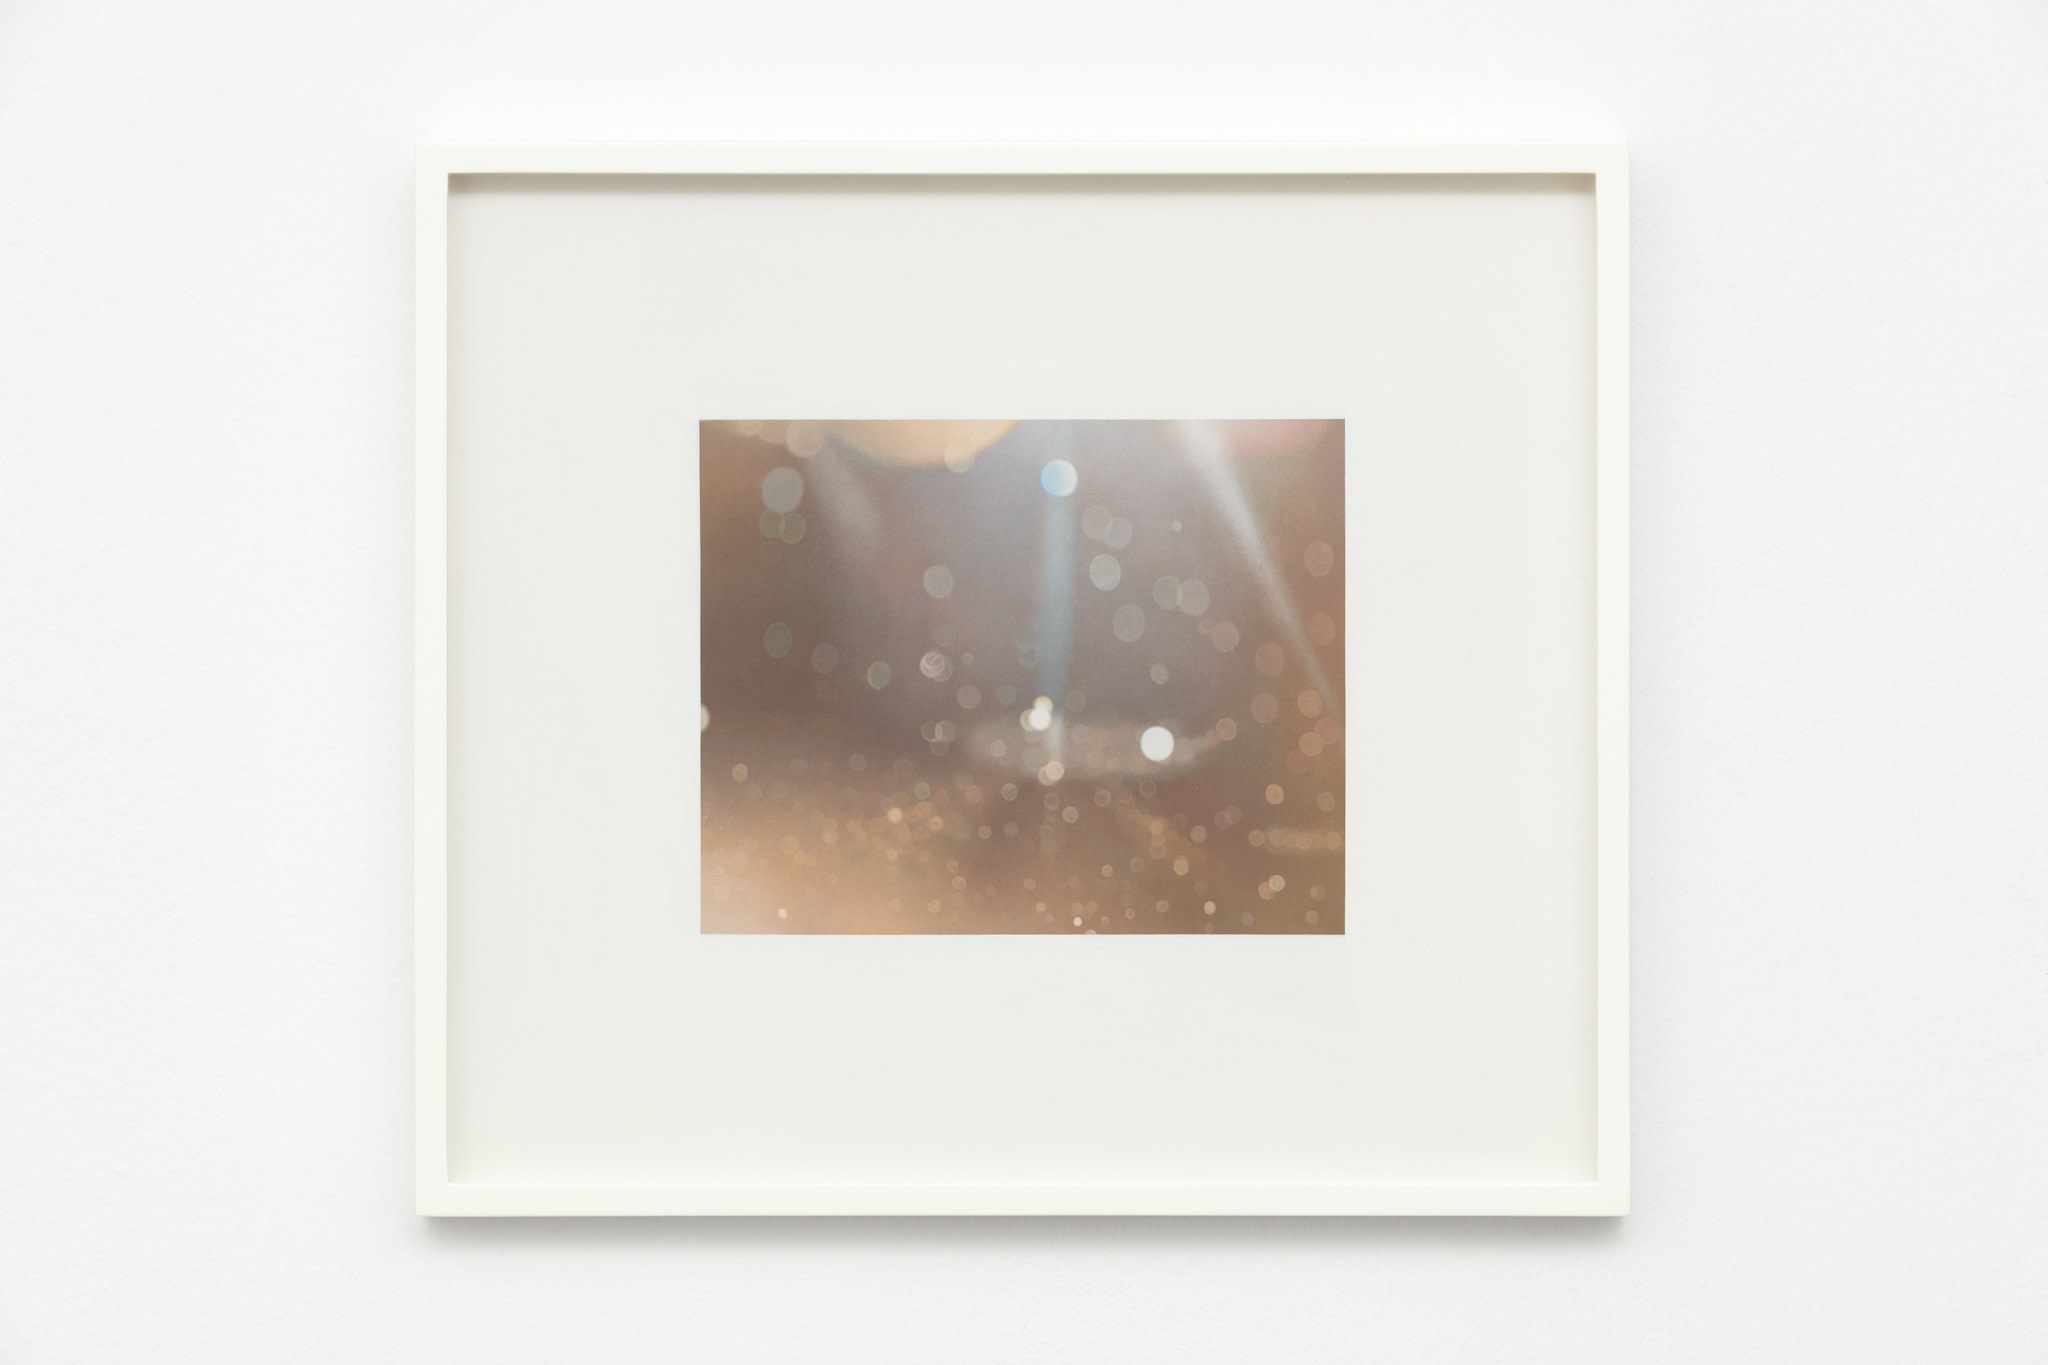 Andrew Grassie, Windscreen, 2020, tempera on paper on board, 14,8 x 18,8 cm (5 1/2 x 7 1/8 in) (image), 31,1 x 35,2 x 3 cm (12 1/4 x 13 3/4 x 1 1/8 in) (framed). Photo © Andrea Rossetti